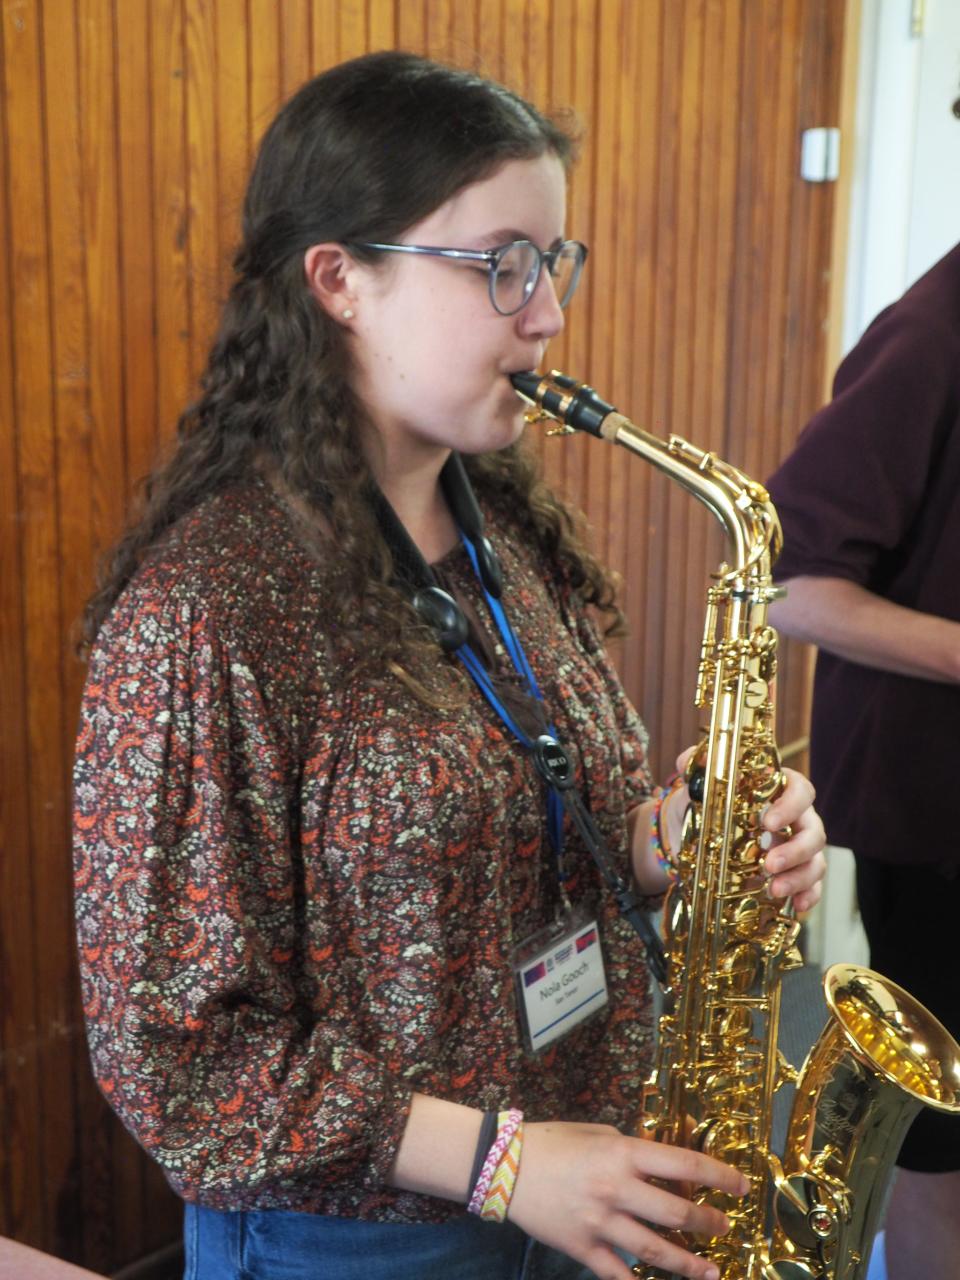 Nola Gooch of Foxboro, Massachusetts plays alto saxophone at the Newport Jazz Summer Camp.